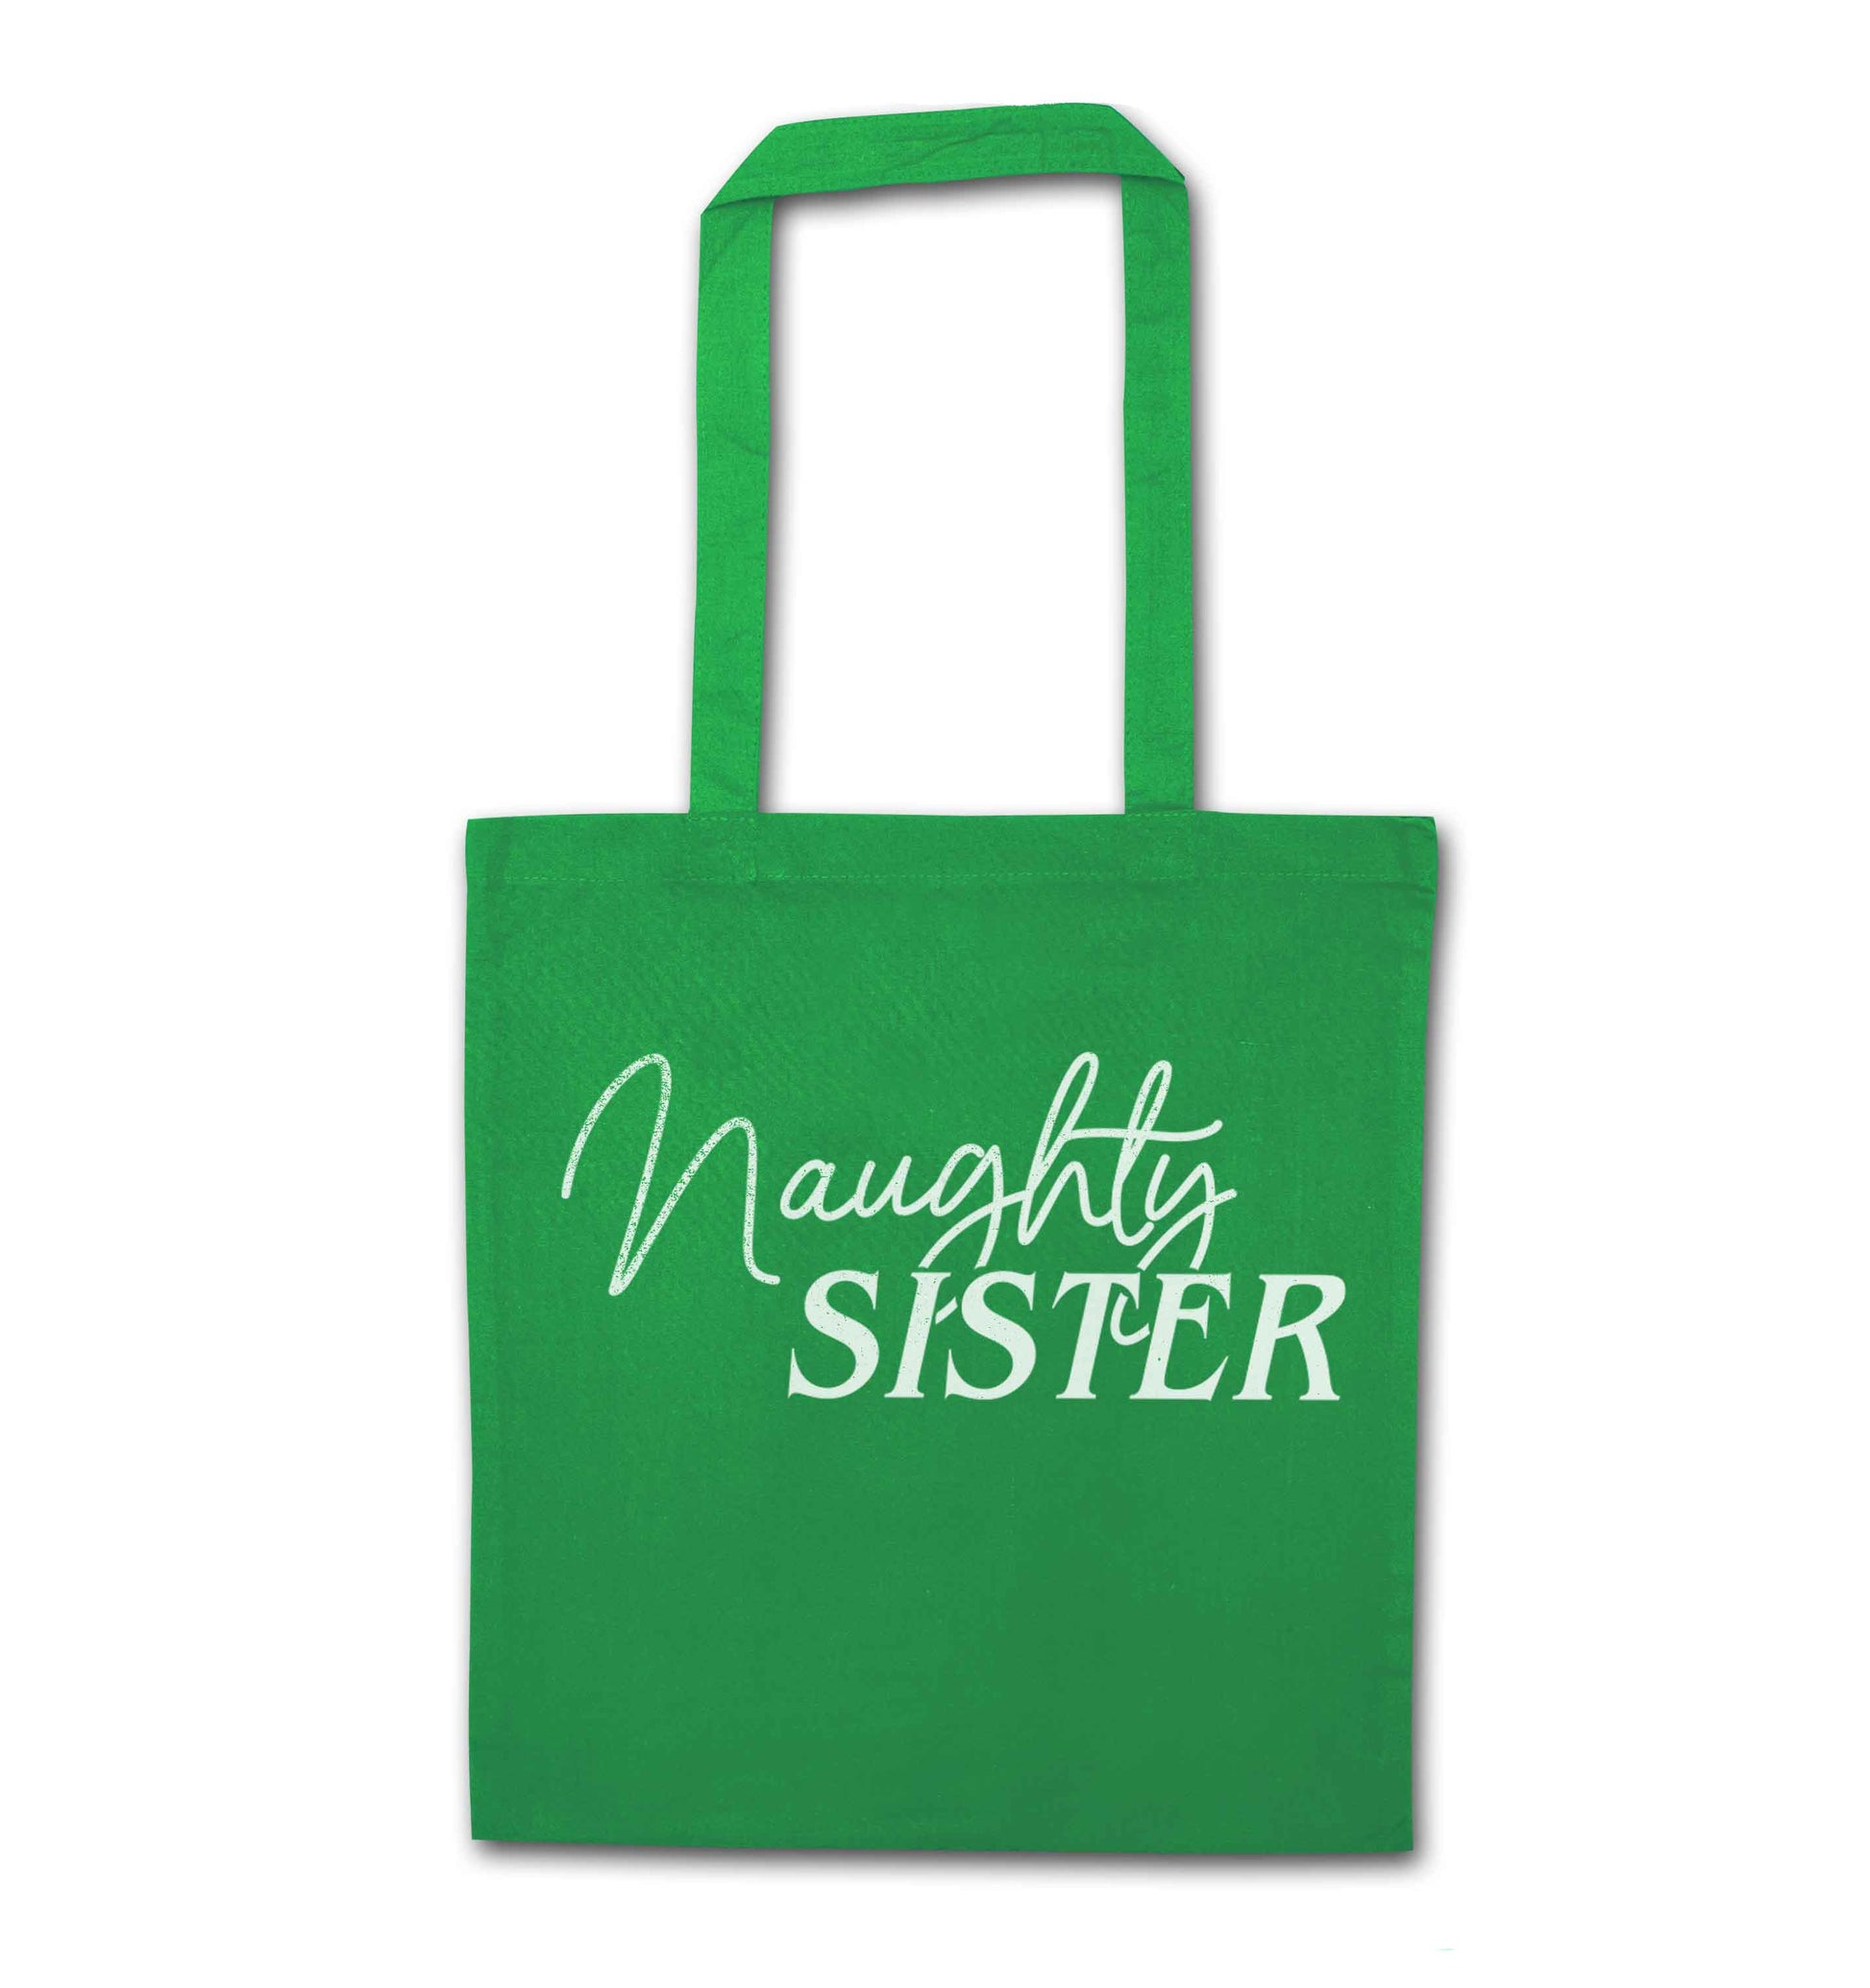 Naughty Sister green tote bag